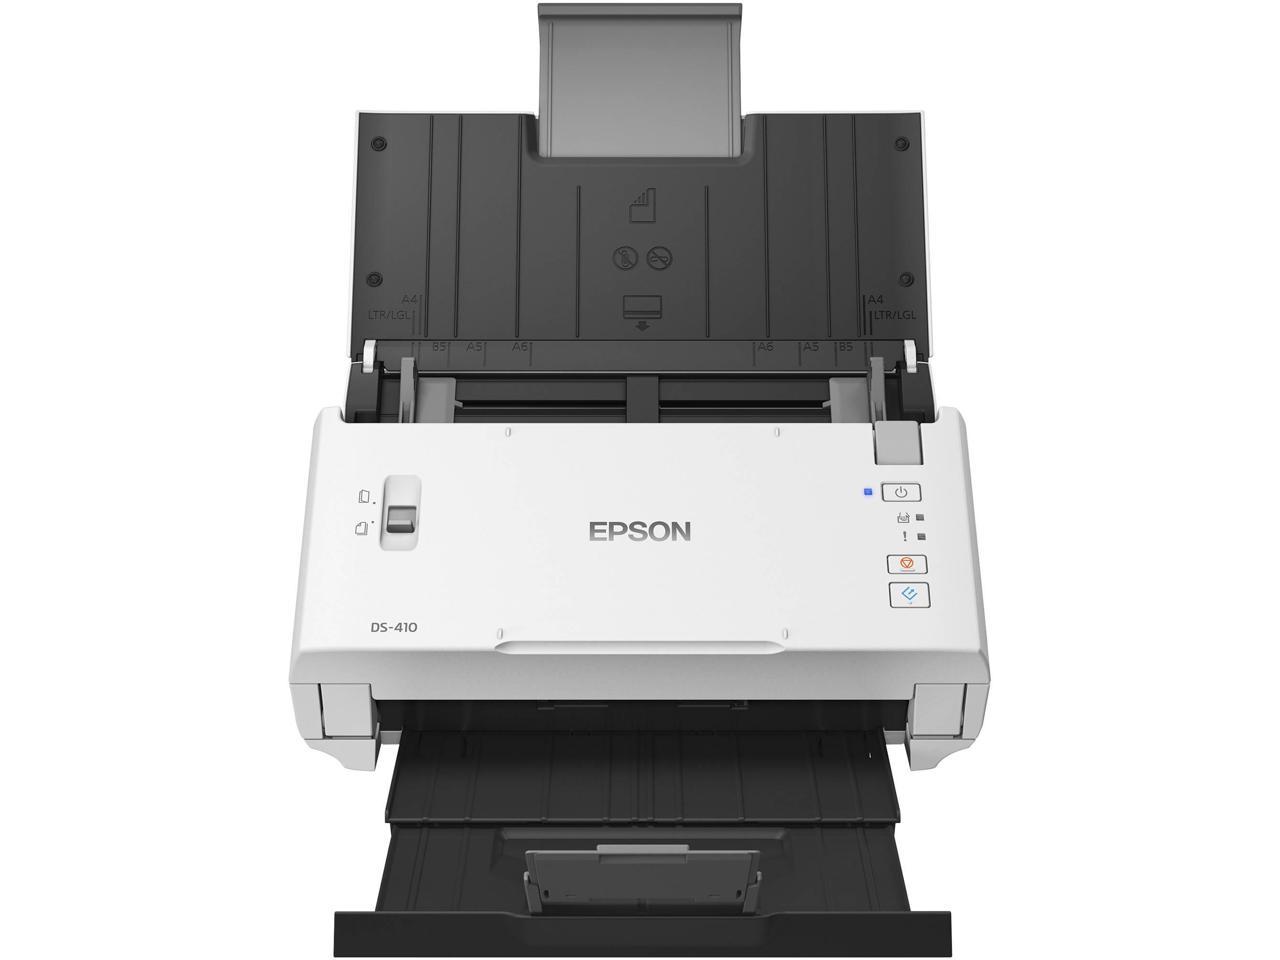 Epson Ds 410 Document Scanner 2447